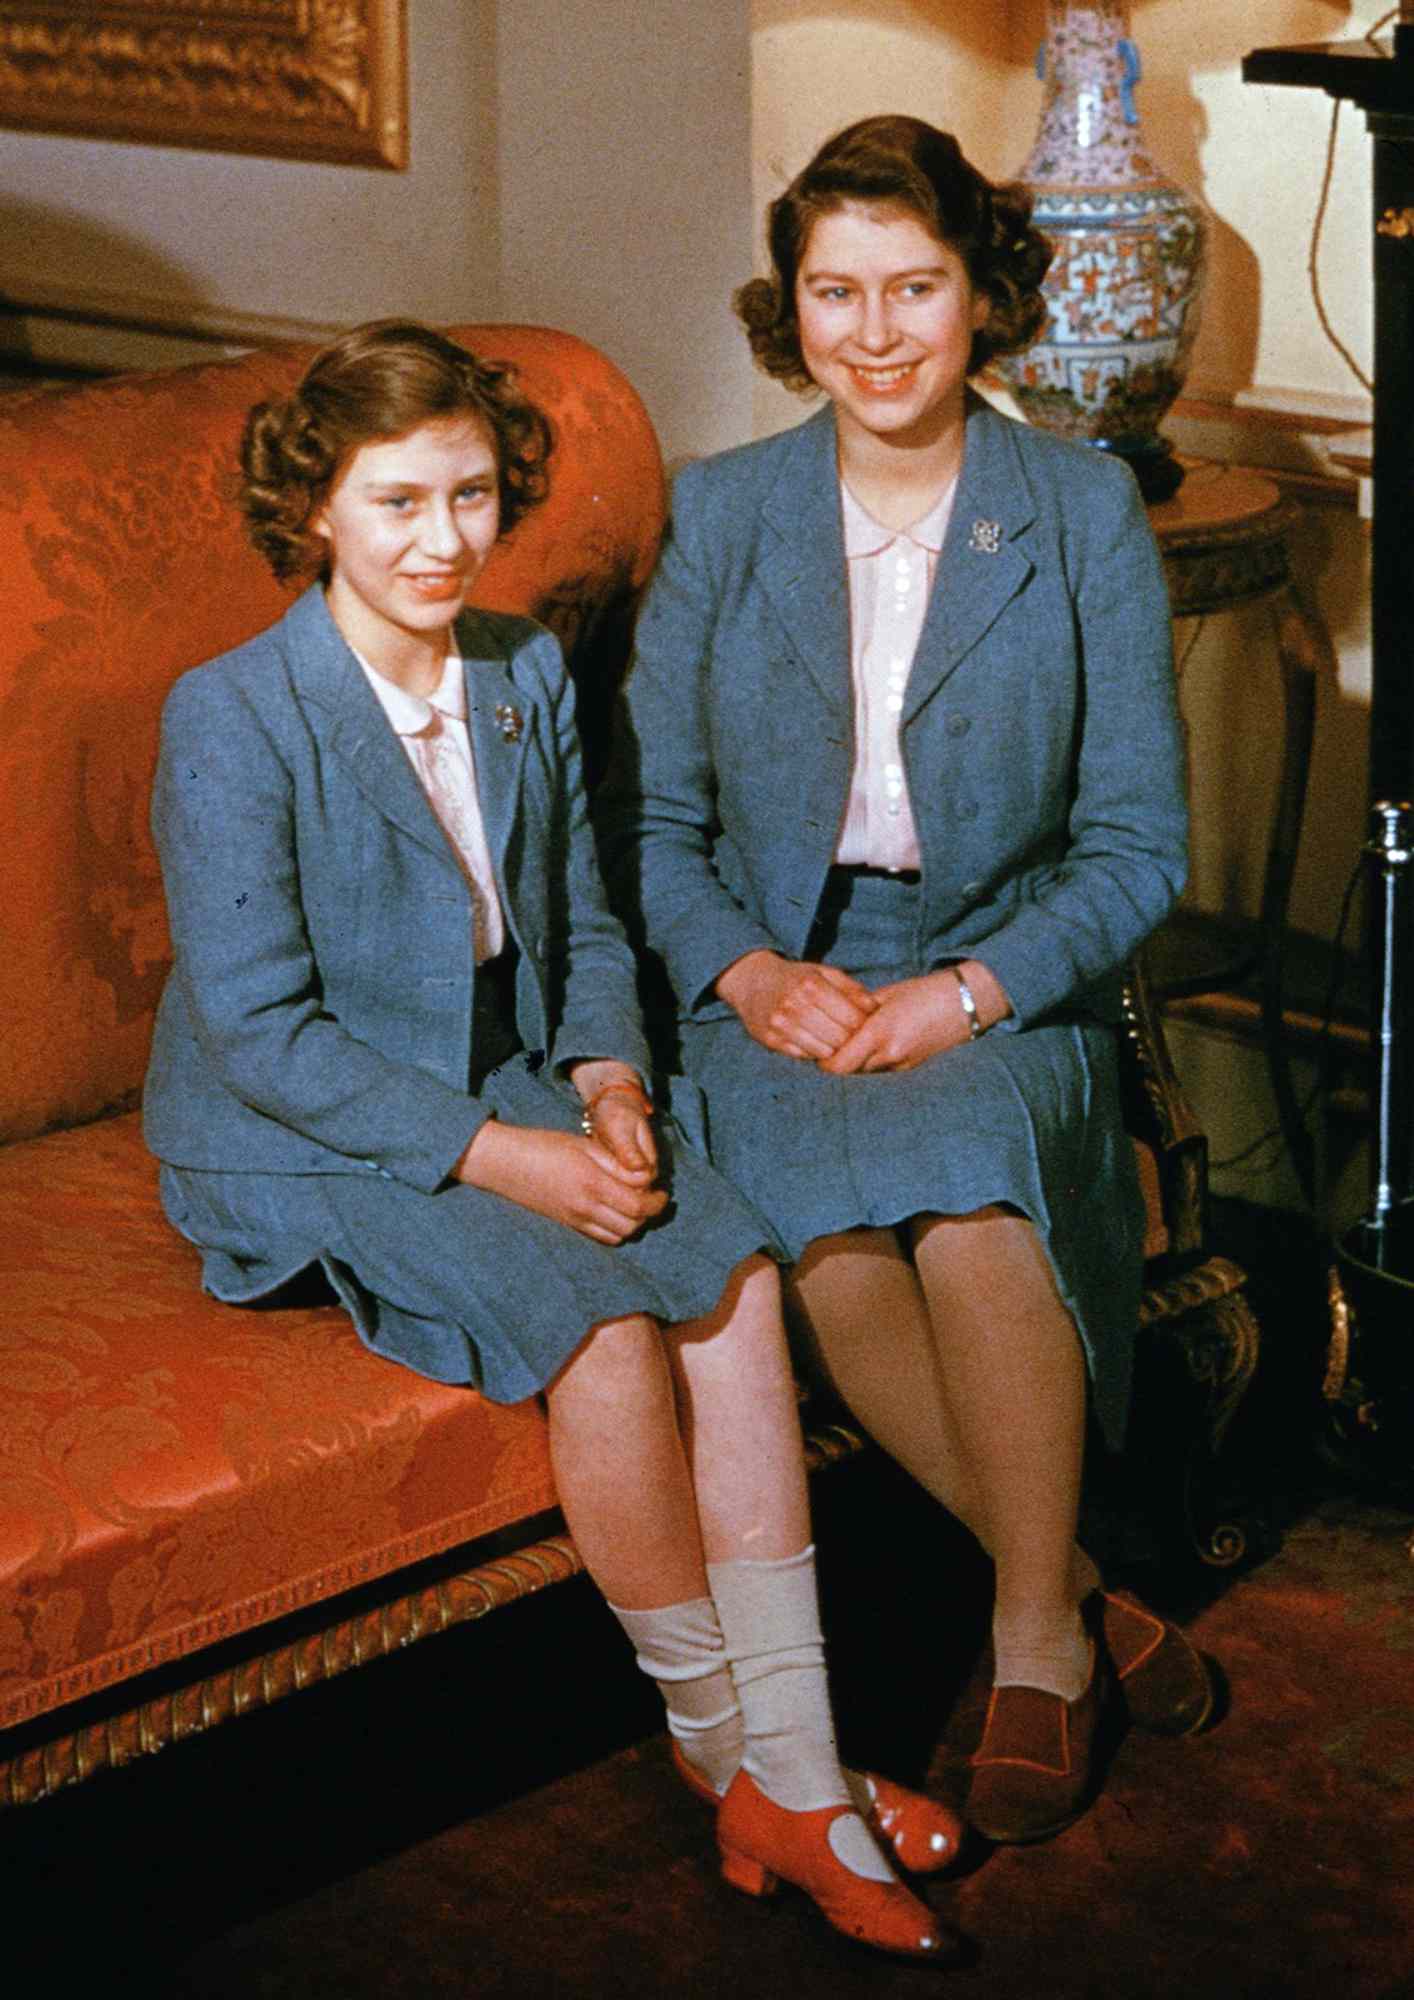 Princess Elizabeth and Princess Margaret (1930 - 2002) wearing matching outfits at Buckingham Palace